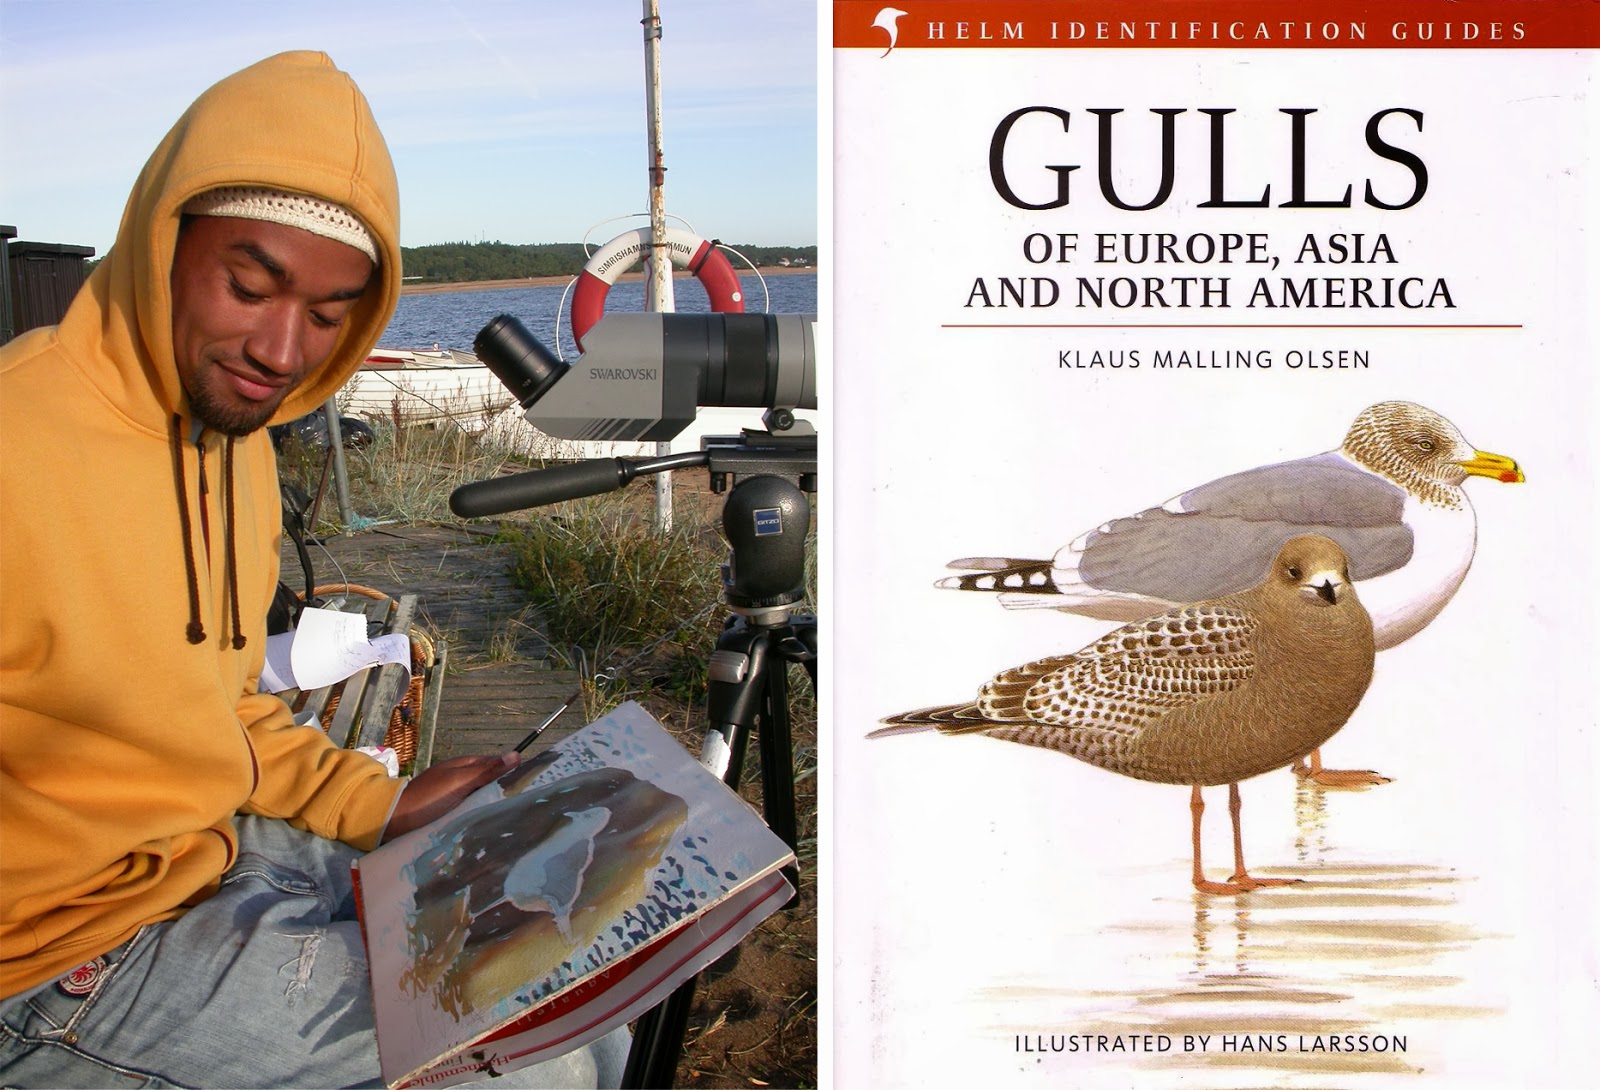 Hans Larsson painting Gulls.jpg